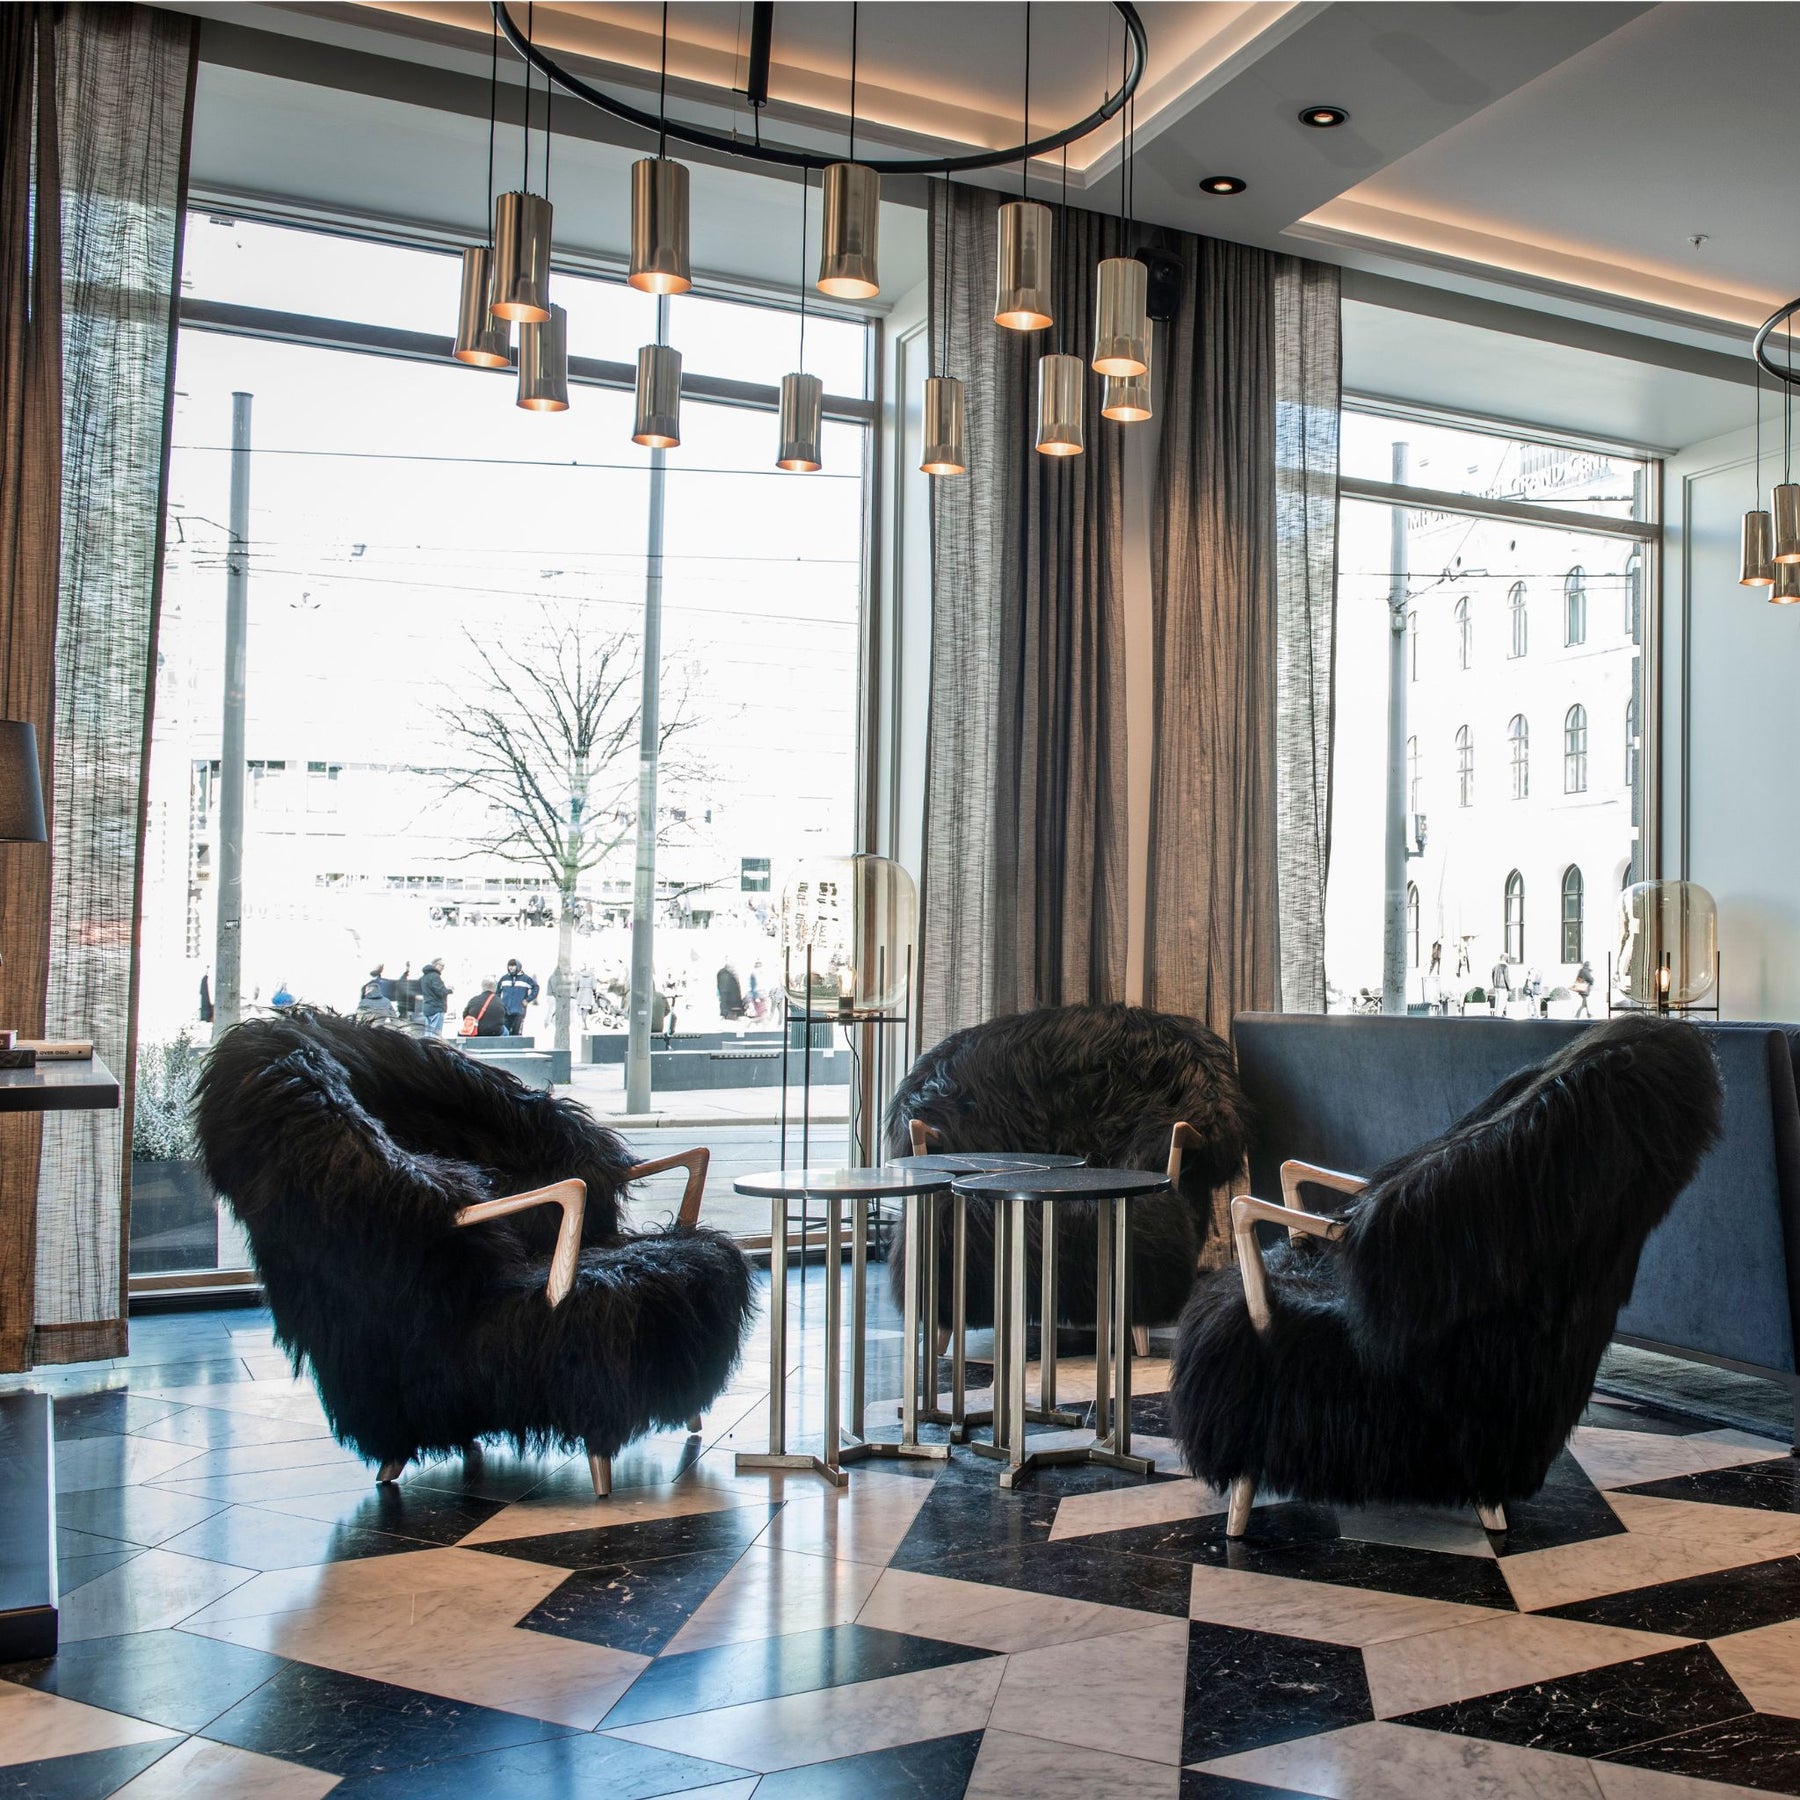 Eikund Fluffy Lounge Chairs Black Sheepskin Oak Arms in Norwegian Hotel Lobby